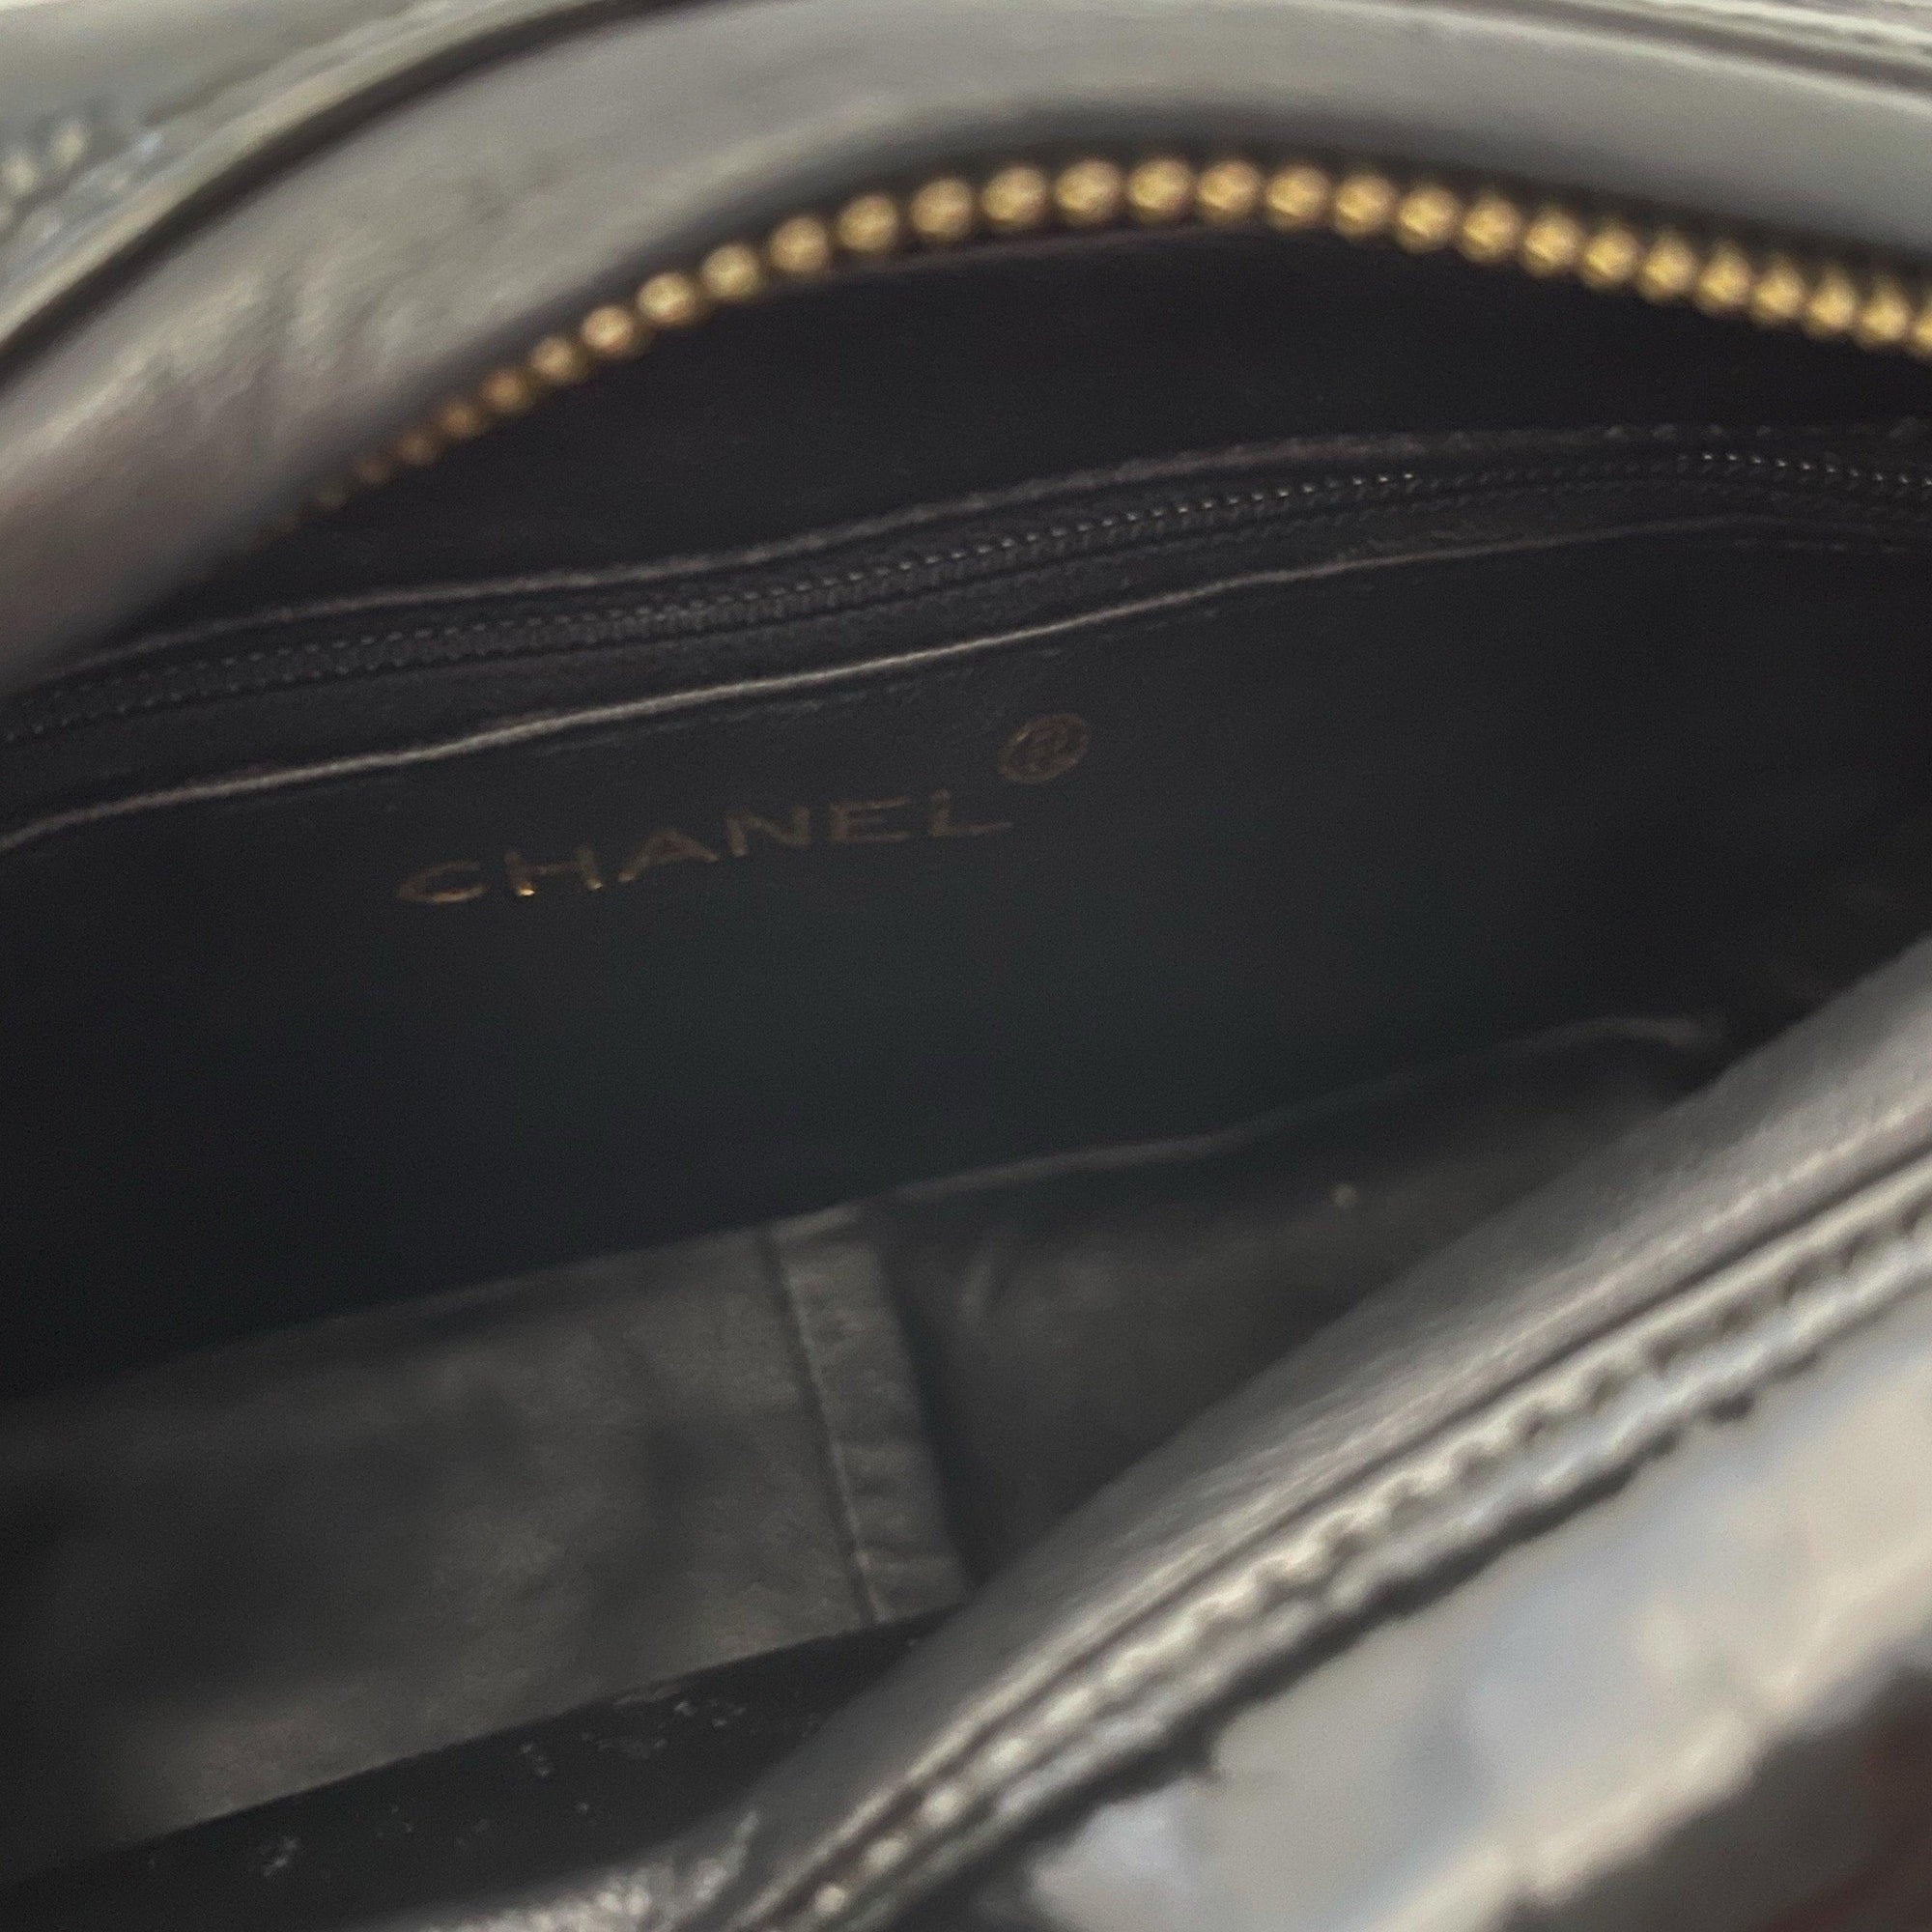 Chanel Black Patent Leather Camera Bag - Handbags